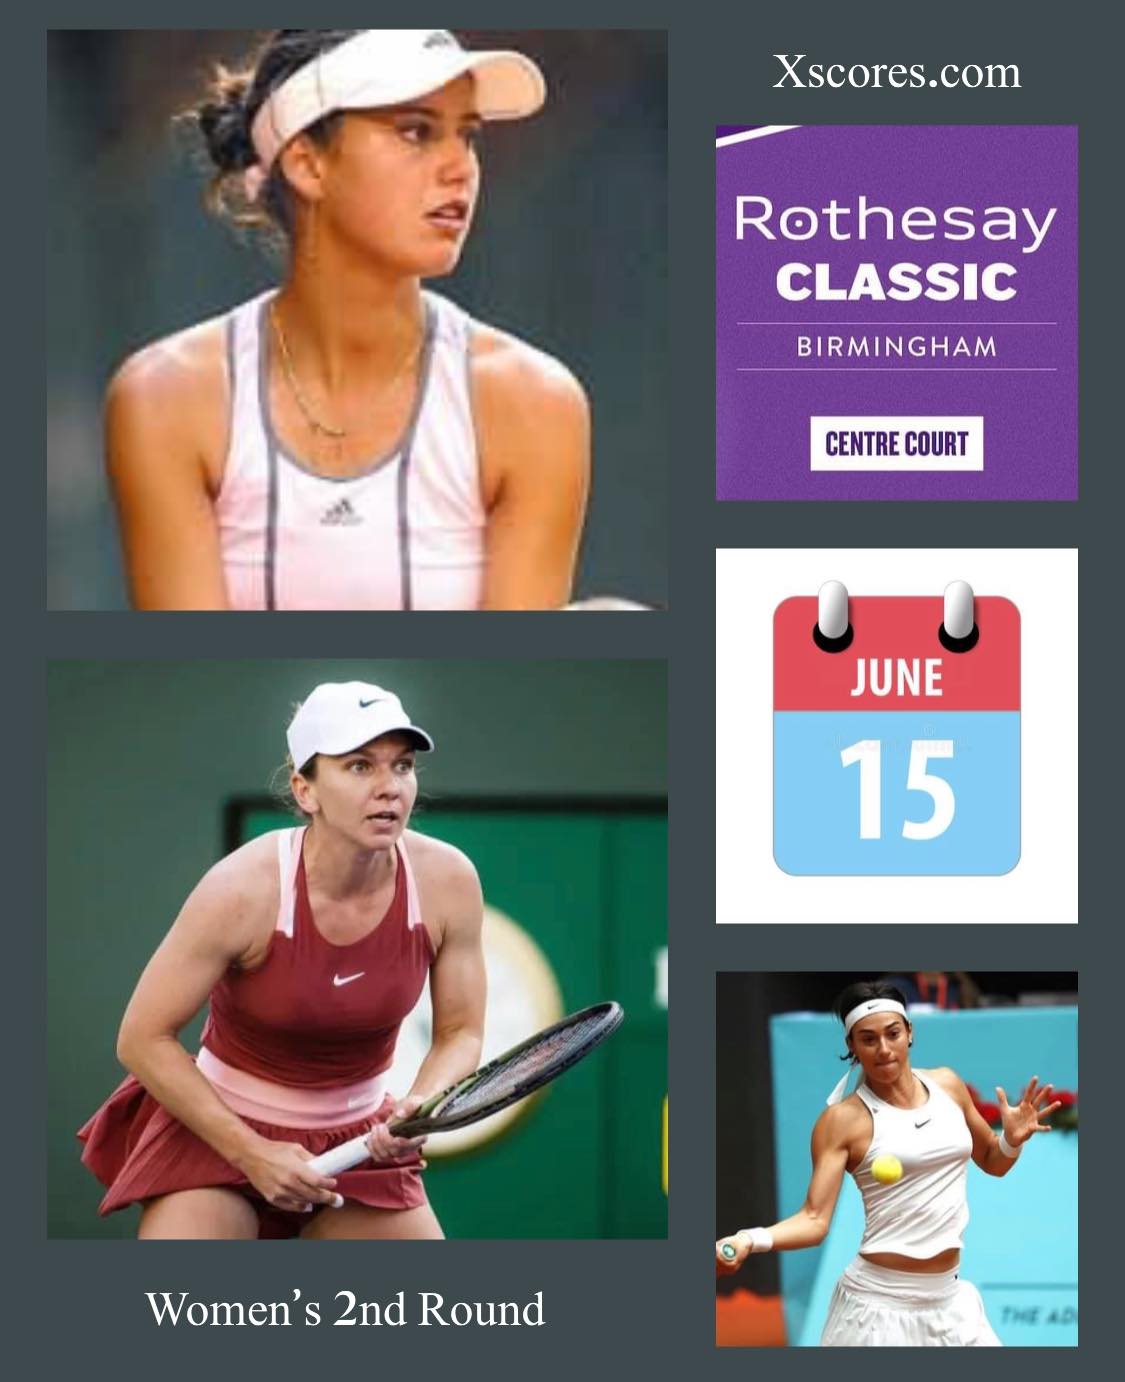 🎾🎾Tennis- WTA 250 – Surface Grass – Rothesay Classic Birmingham, BIRMINGHAM, GREAT BRITAIN (13th-19th June 2022)🎾🎾